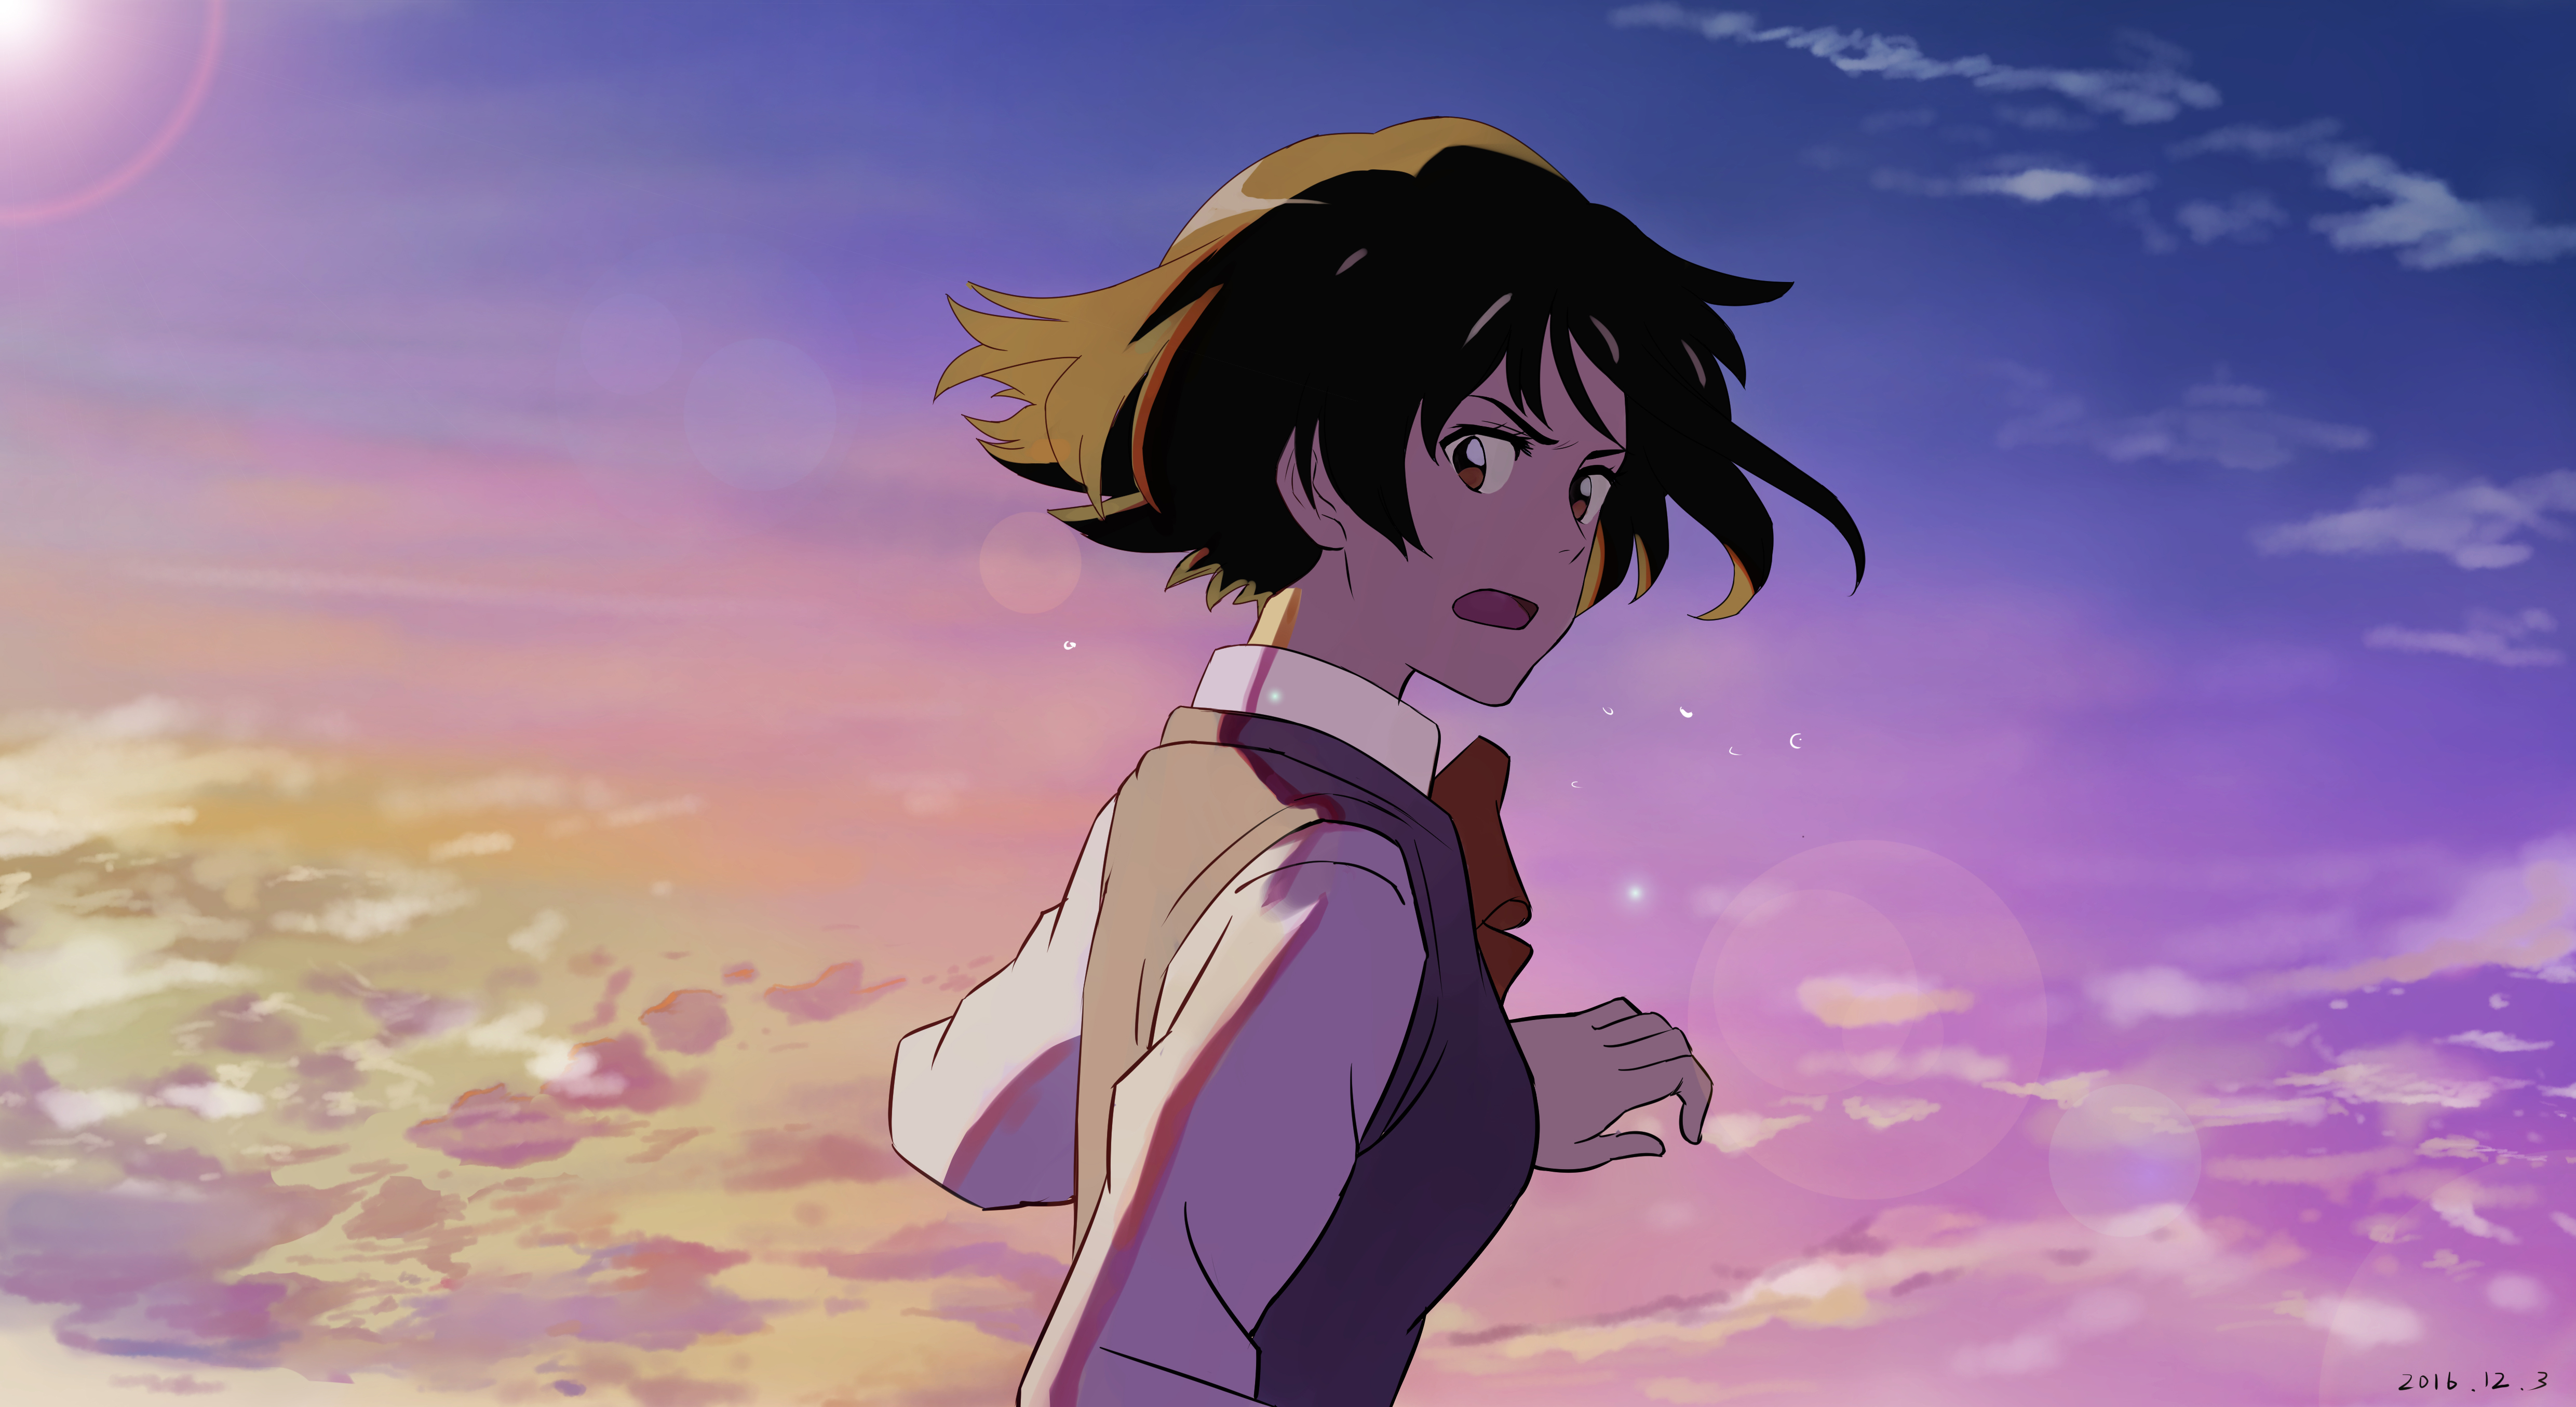 Otaku Rise Up in Magical Girl Destroyers TV Anime Promo - Crunchyroll News